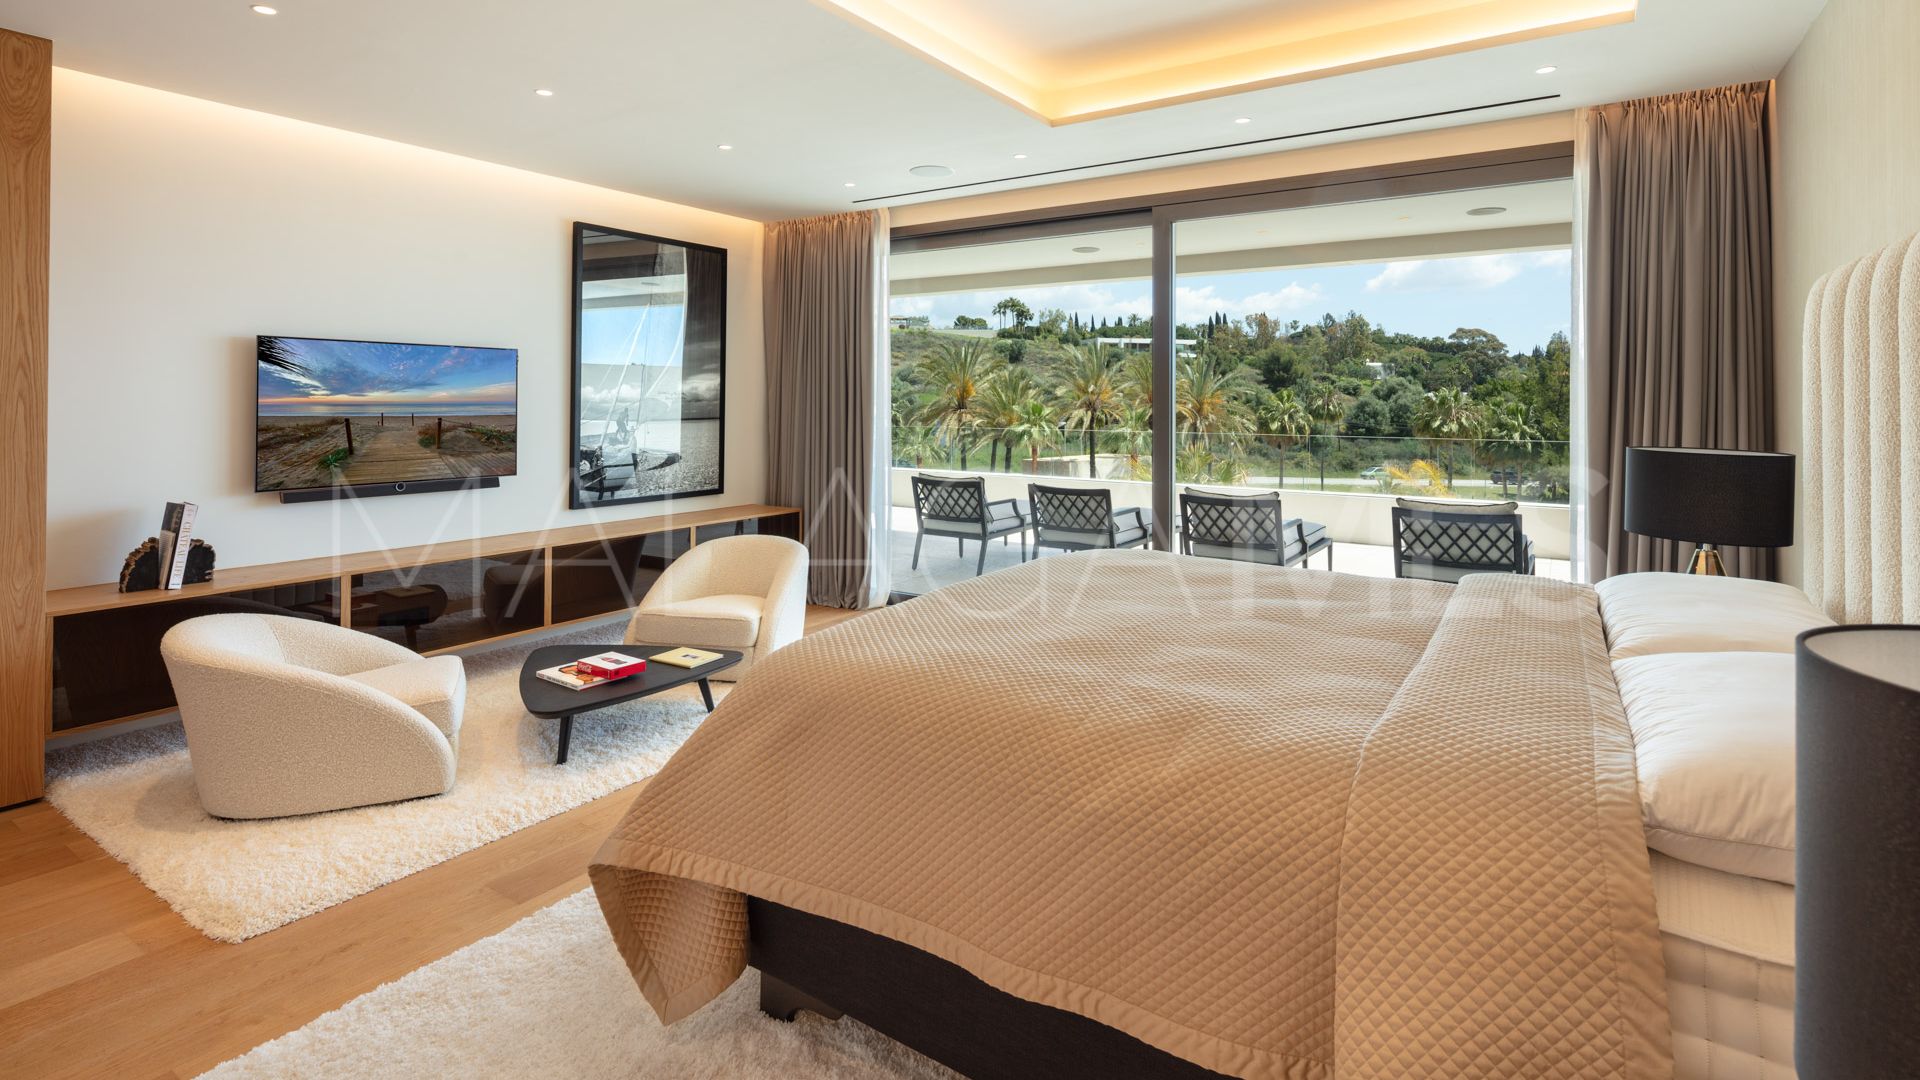 4 bedrooms duplex penthouse in Marbella Golden Mile for sale